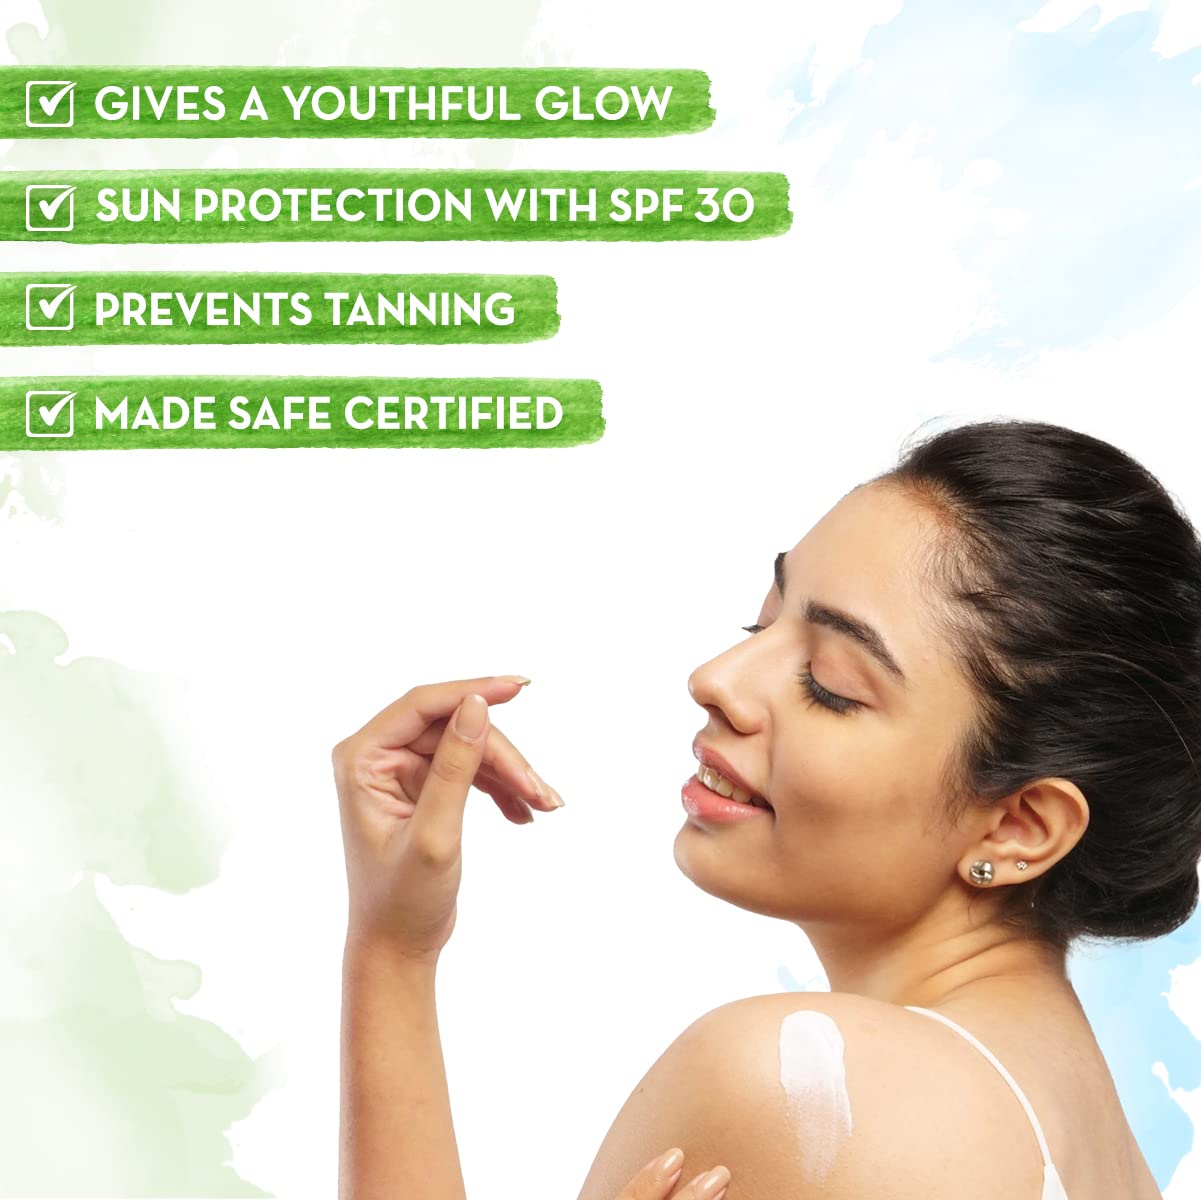 Mamaearth Youthful Glow Aloe Vera Sunscreen Body Lotion SPF 30 - With Aloe Vera & Ashwagandha  - 300 ml